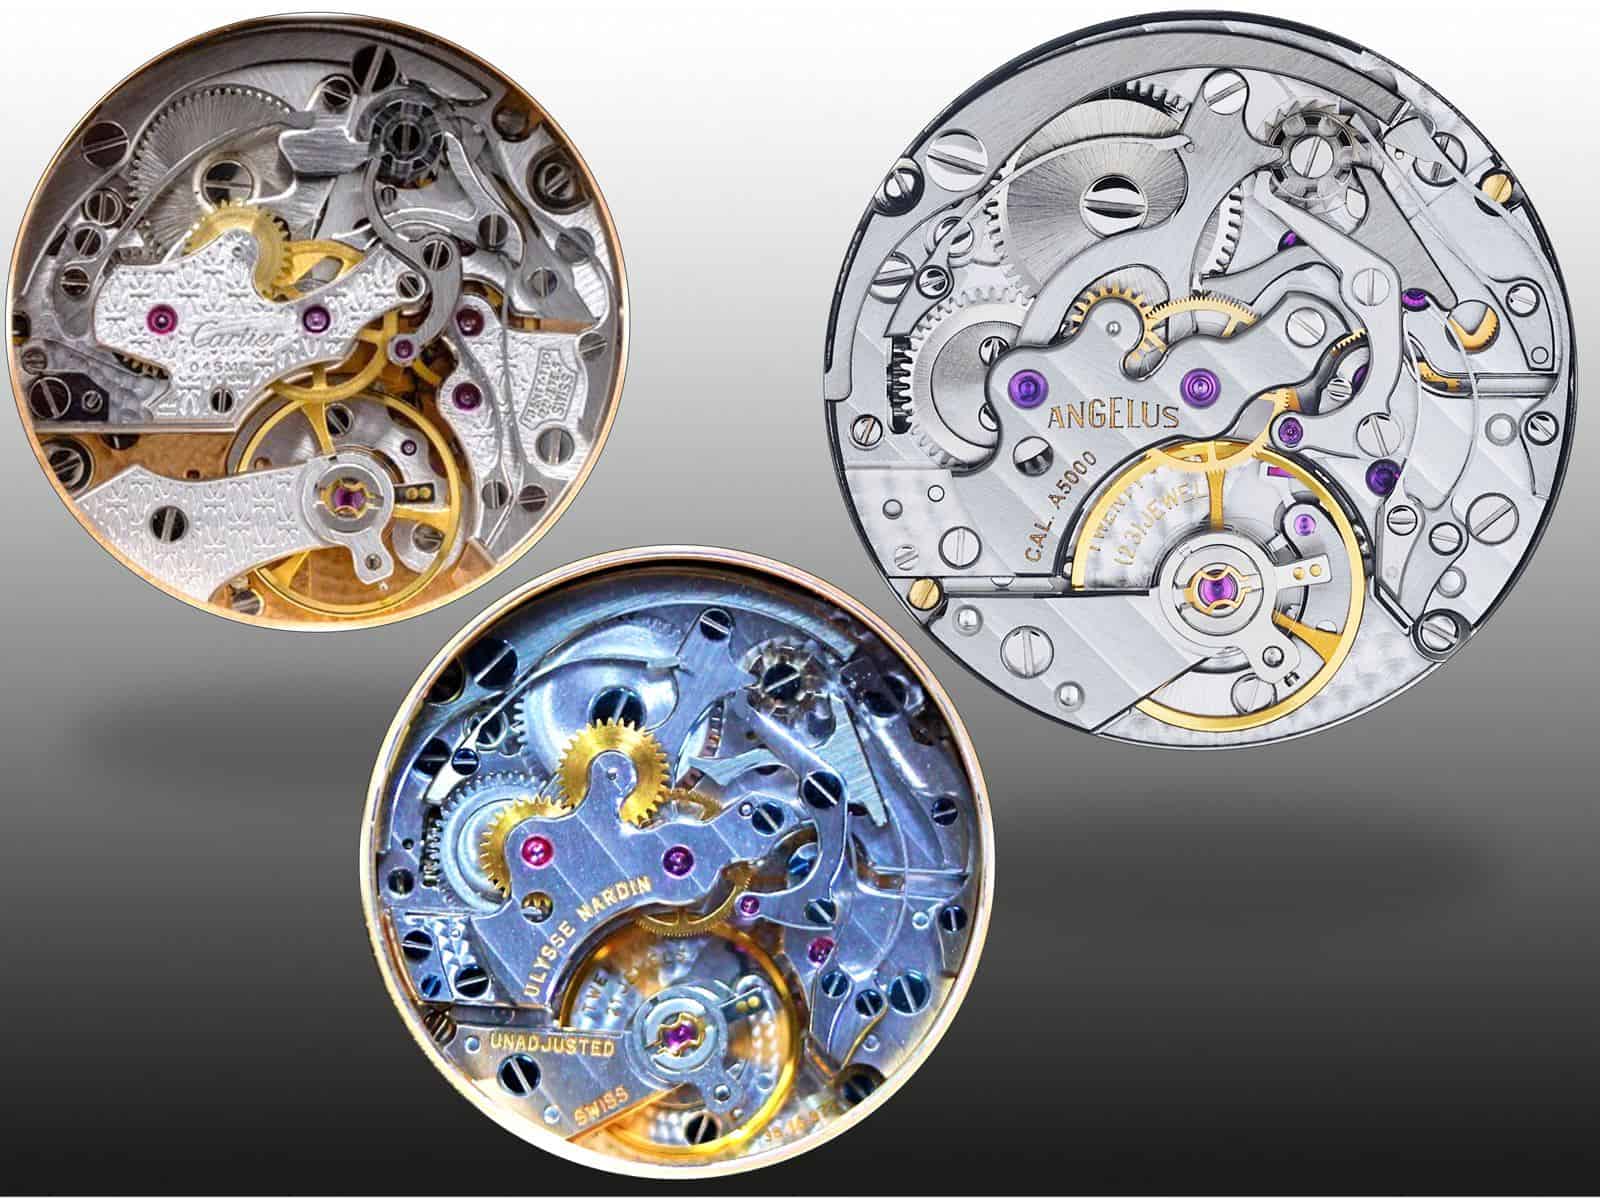 Chronographenkaliber Cartier 045MC, Ulysse Nardin UN 38 und Angelis A5000 (C) Uhrenkosmos